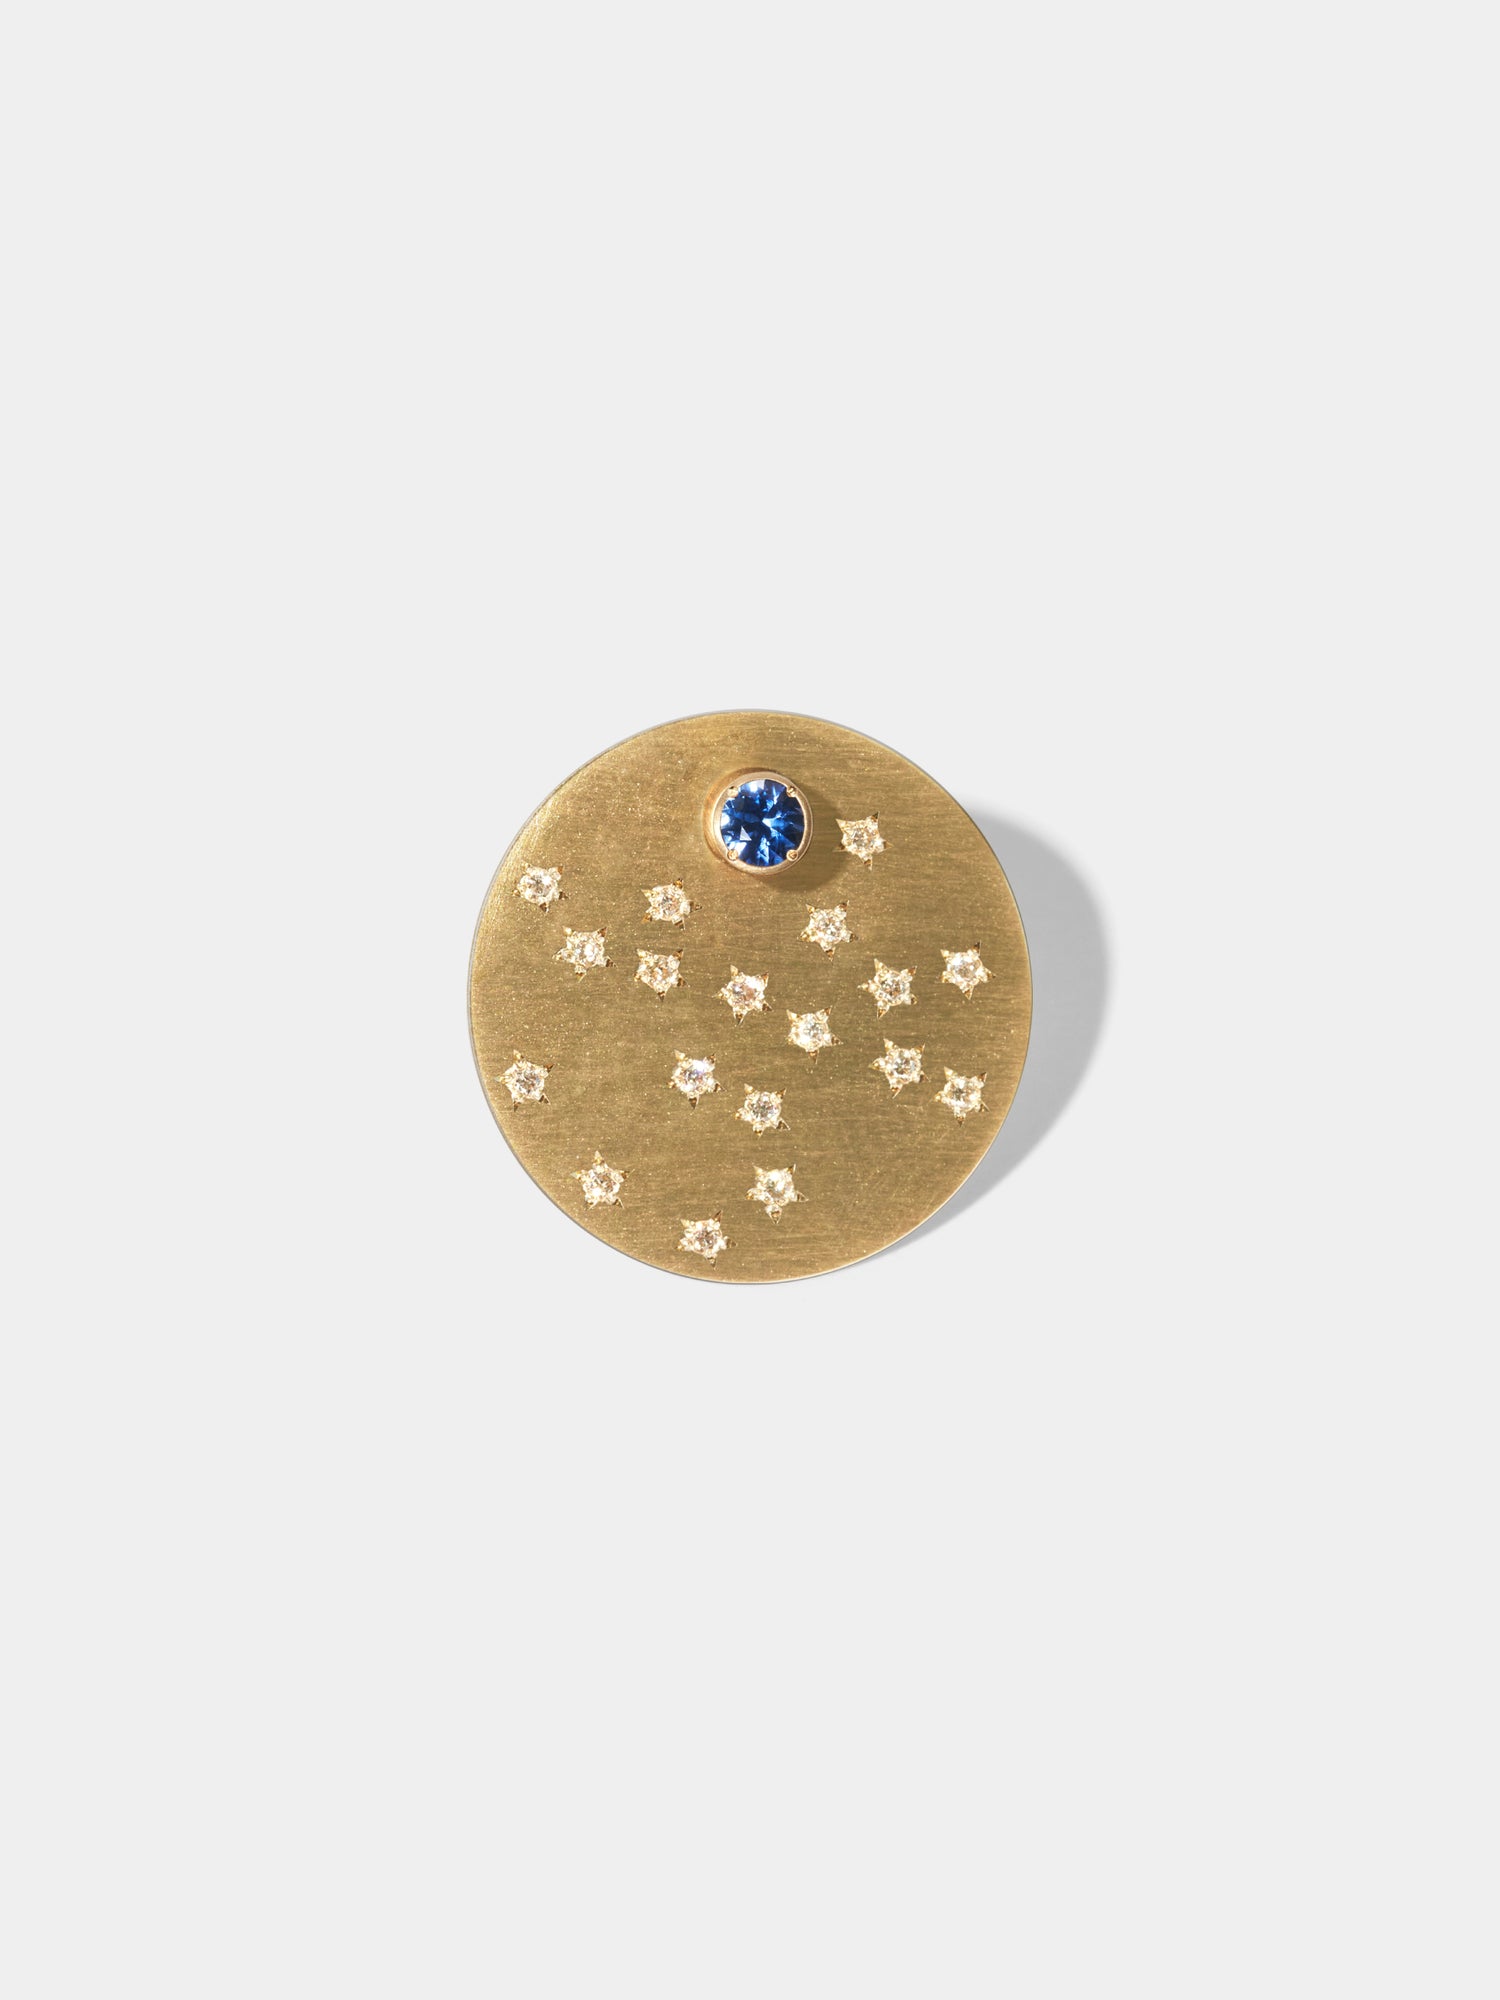 ASTERISM_Pierced Earring_Sagittarius(射手座) / Sapphire